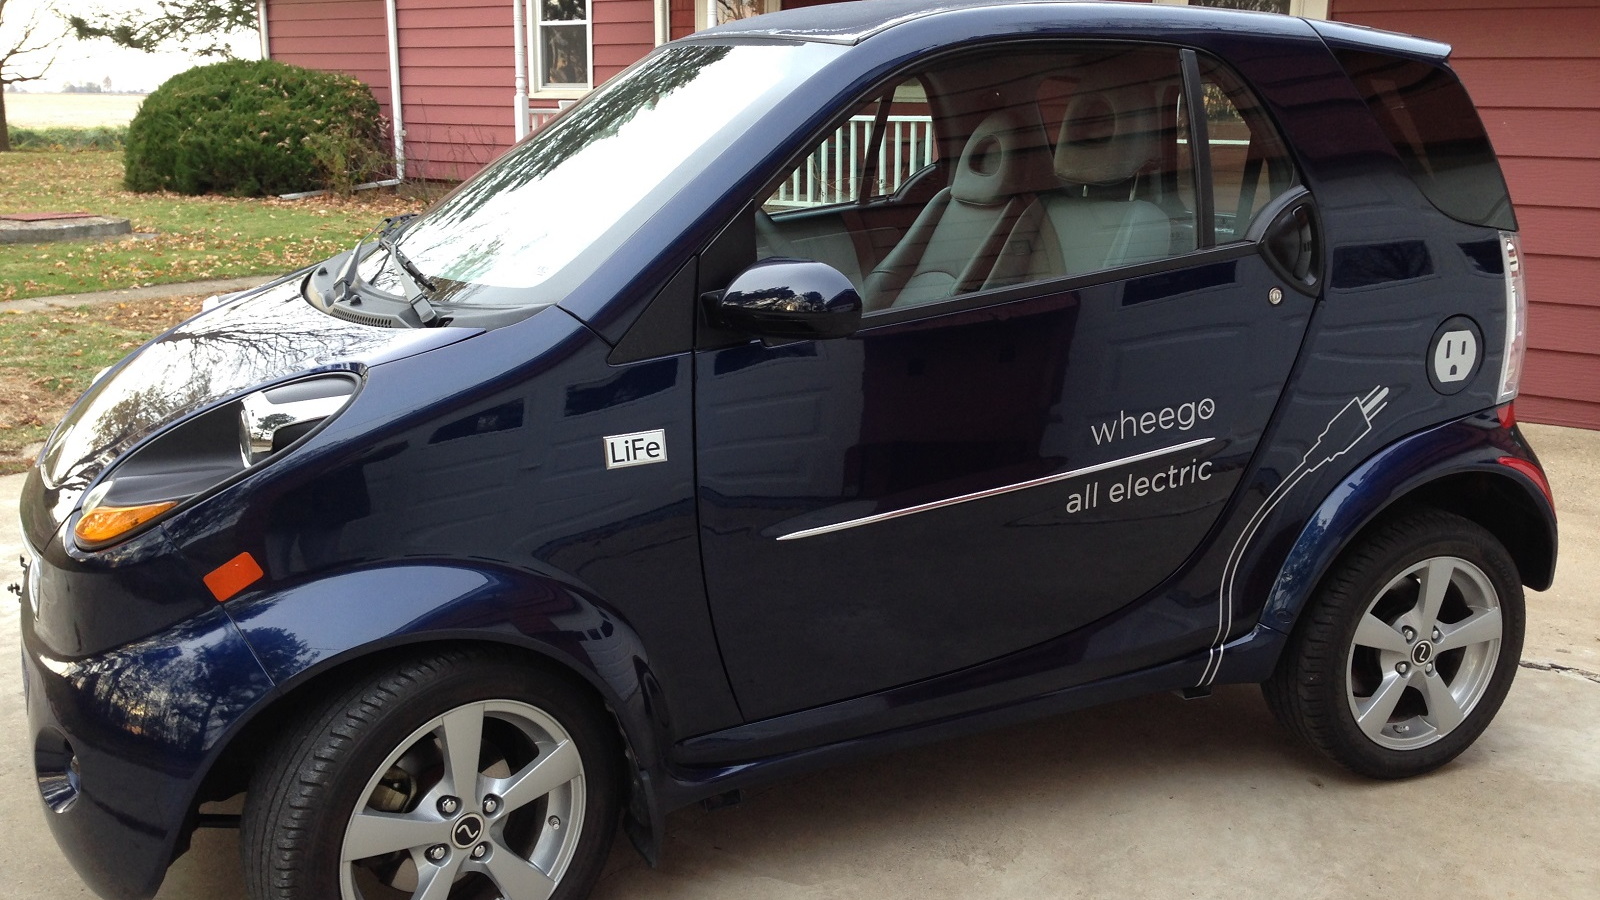 2013 Wheego LiFe electric car   [photo:Jen Danzinger]